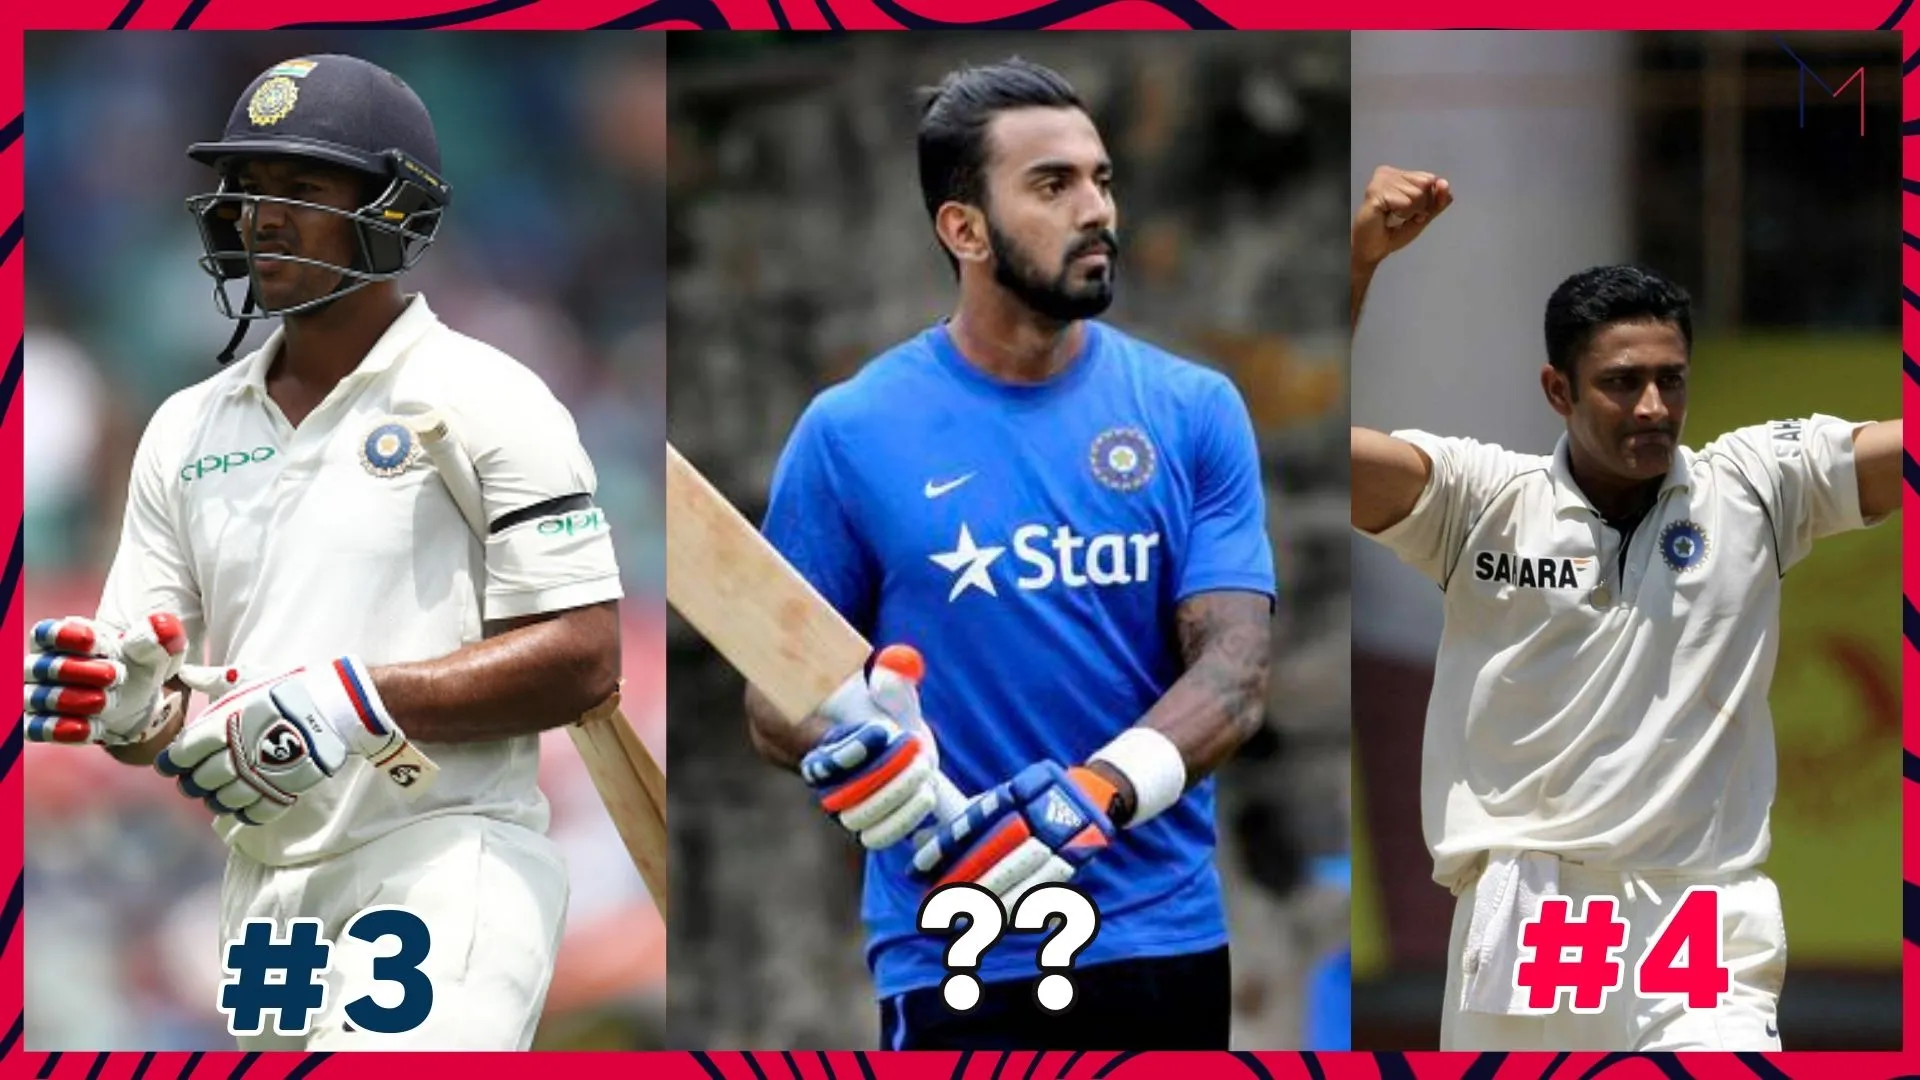 Top 10 most popular cricketers from Karnataka - Famous cricket players from Karnataka